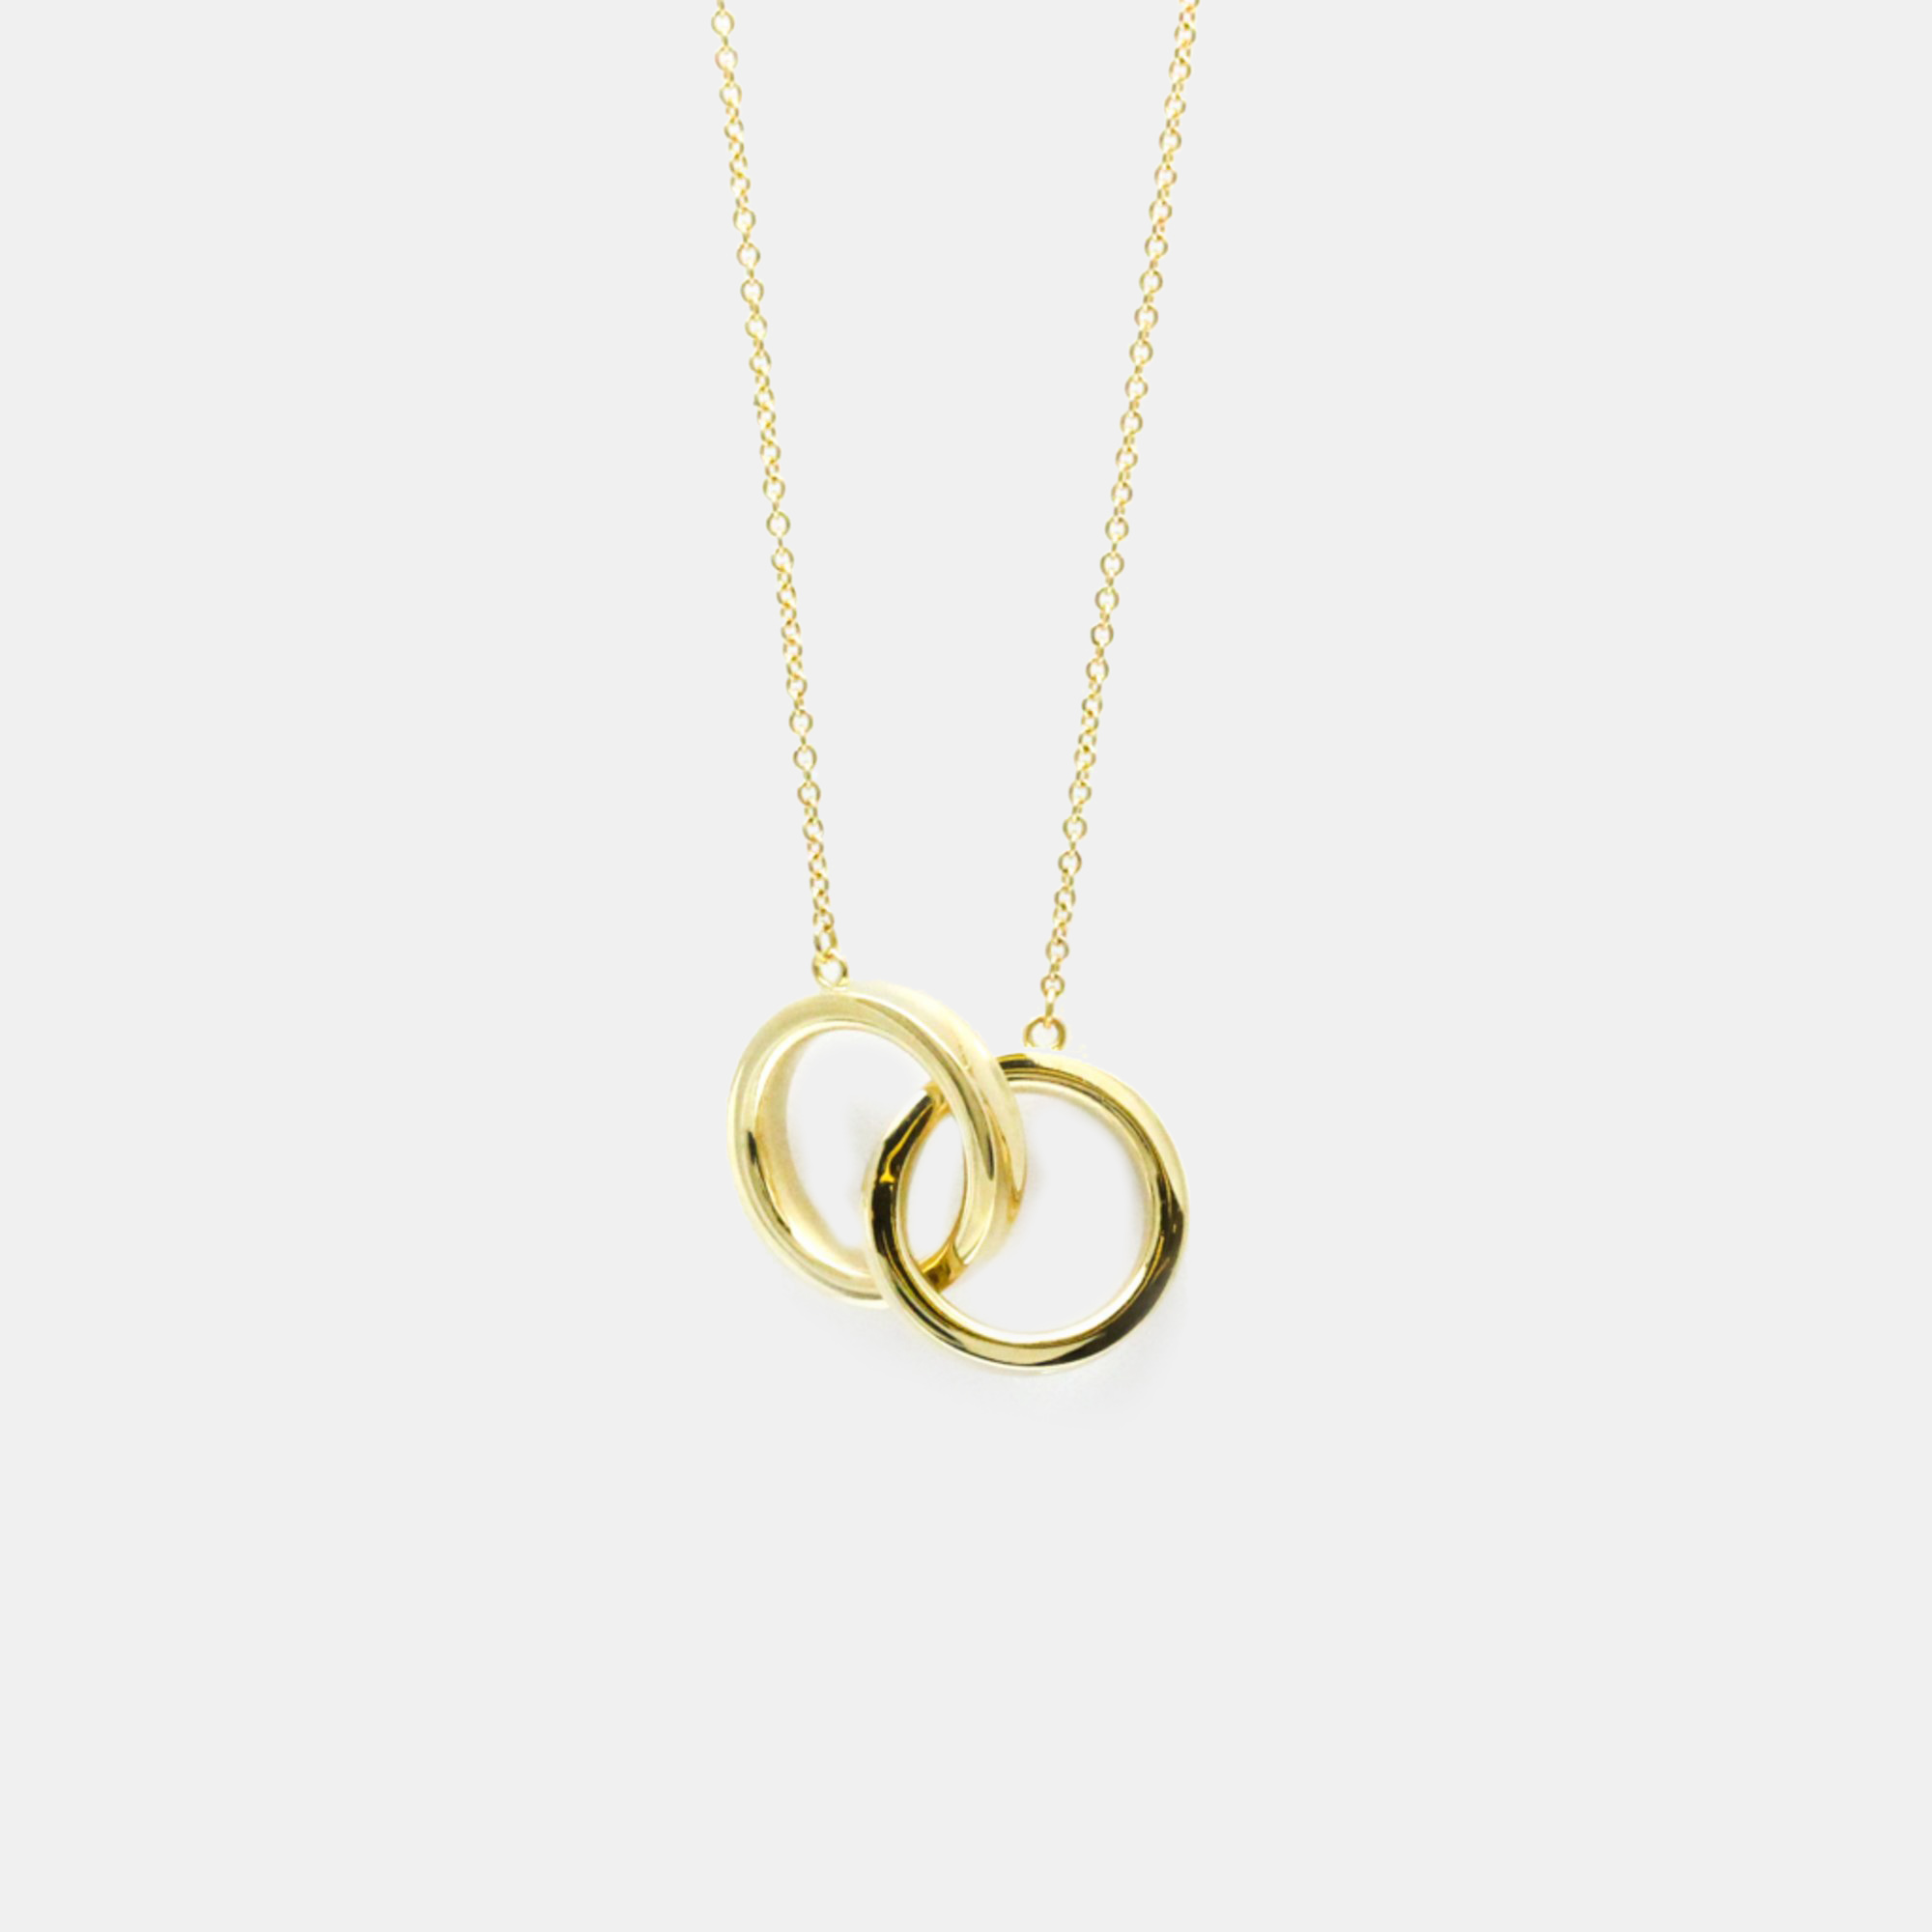 Tiffany & co. 18k yellow gold 1837 interlocking circles pendant necklace